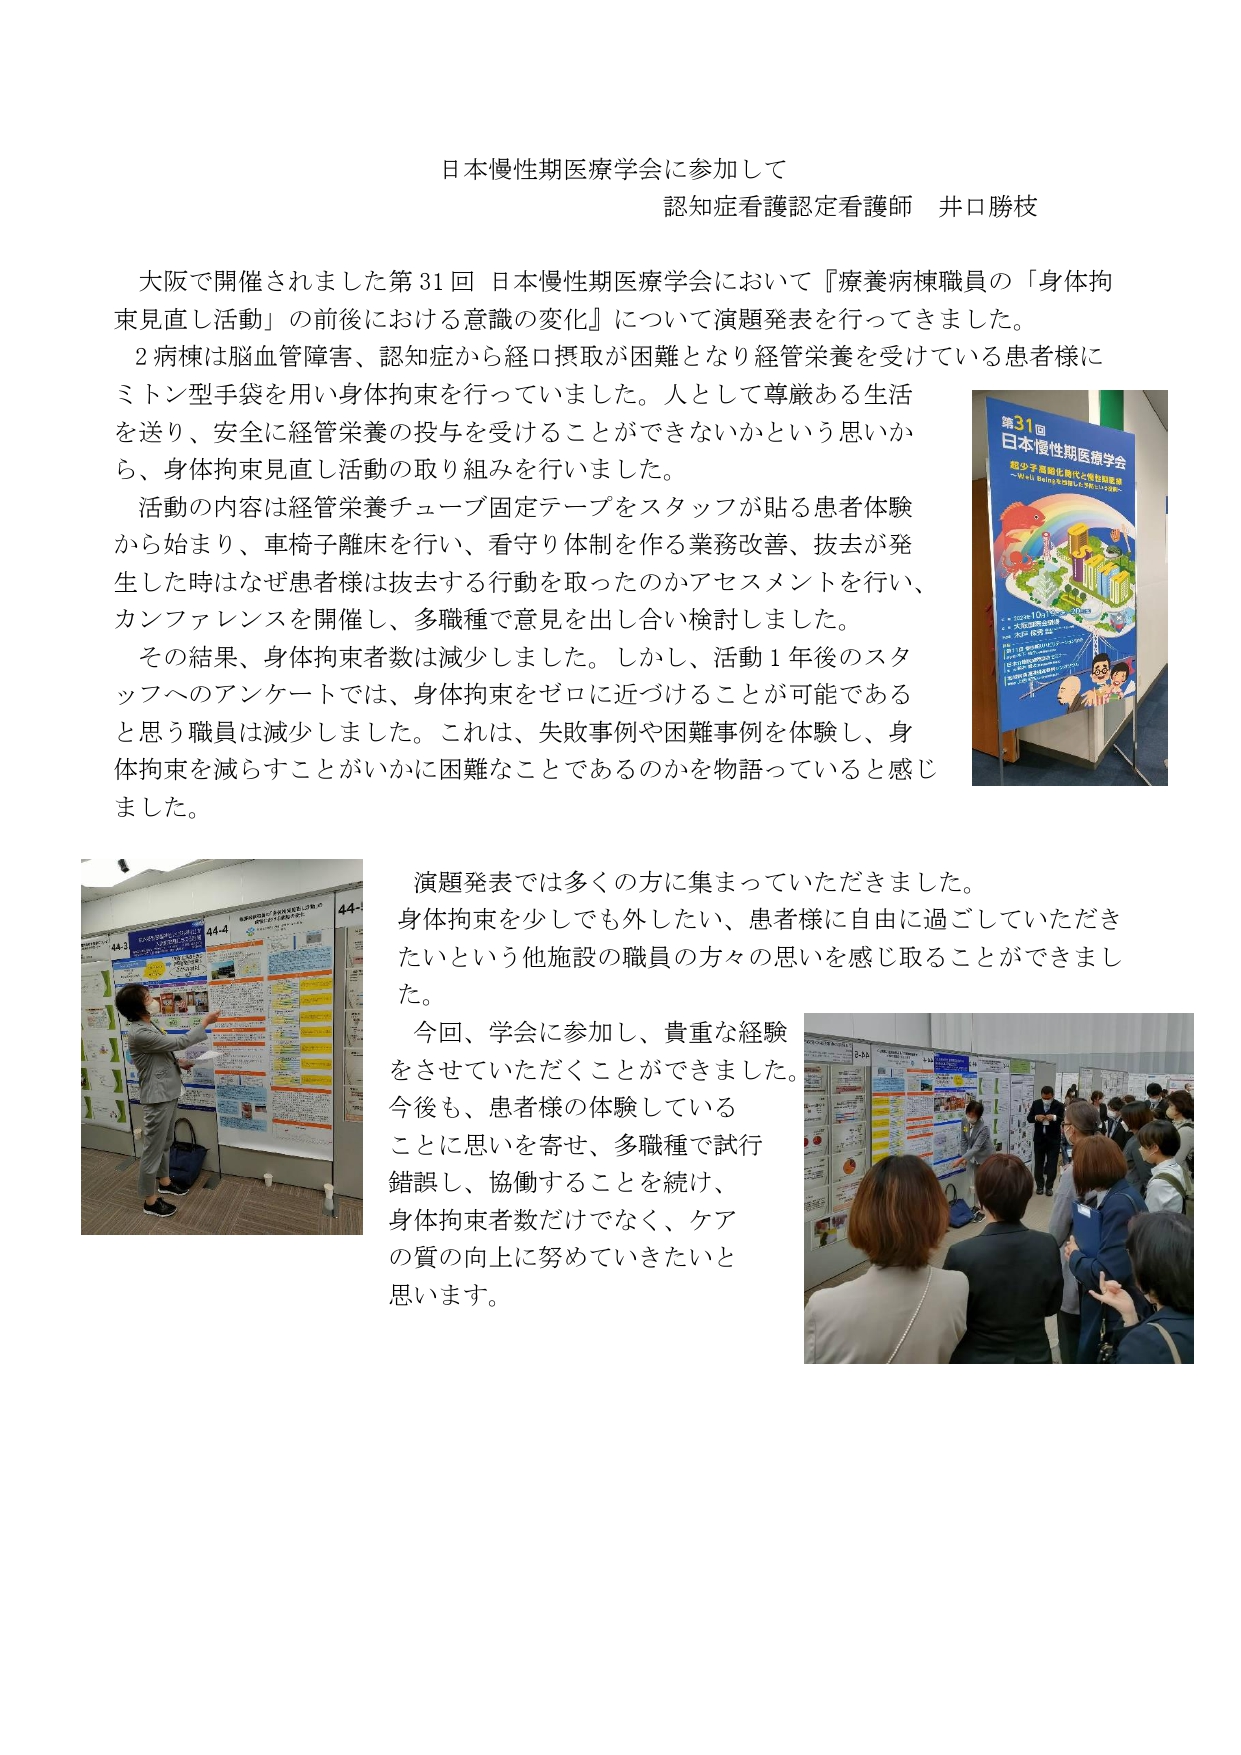 https://www.mitsukawa-fukuroi.jp/information/newspaper-18034/